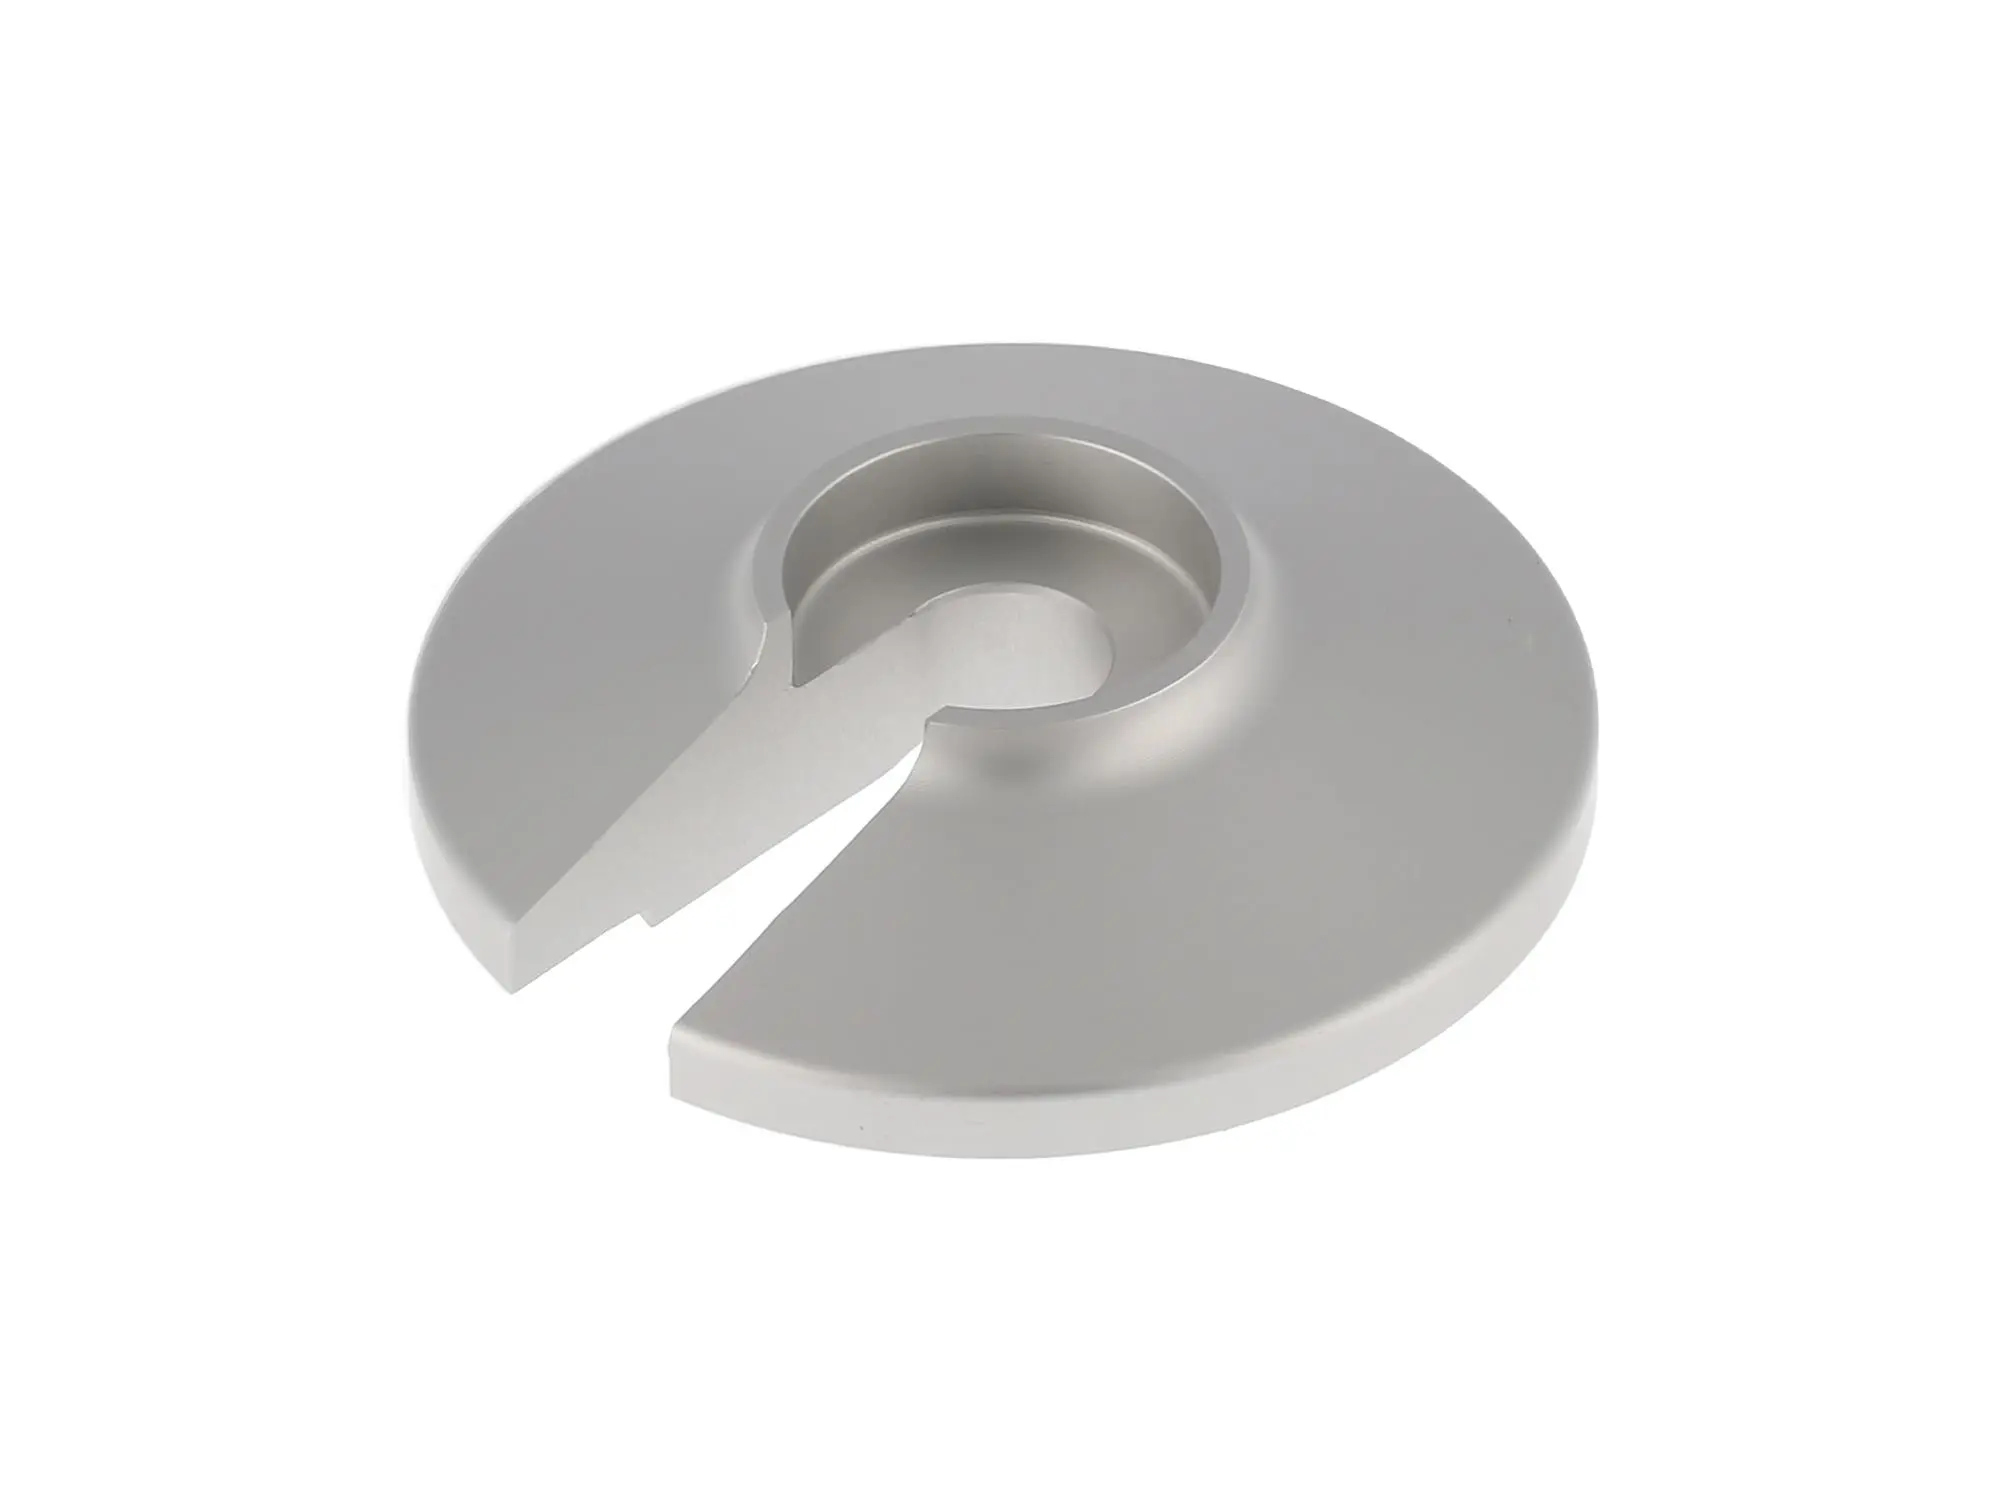 Steckscheibe - Aluminium - Farbe Silber matt - für Enduro-Federbein Simson S51 Enduro, Art.-Nr.: 10022743 - Bild 1